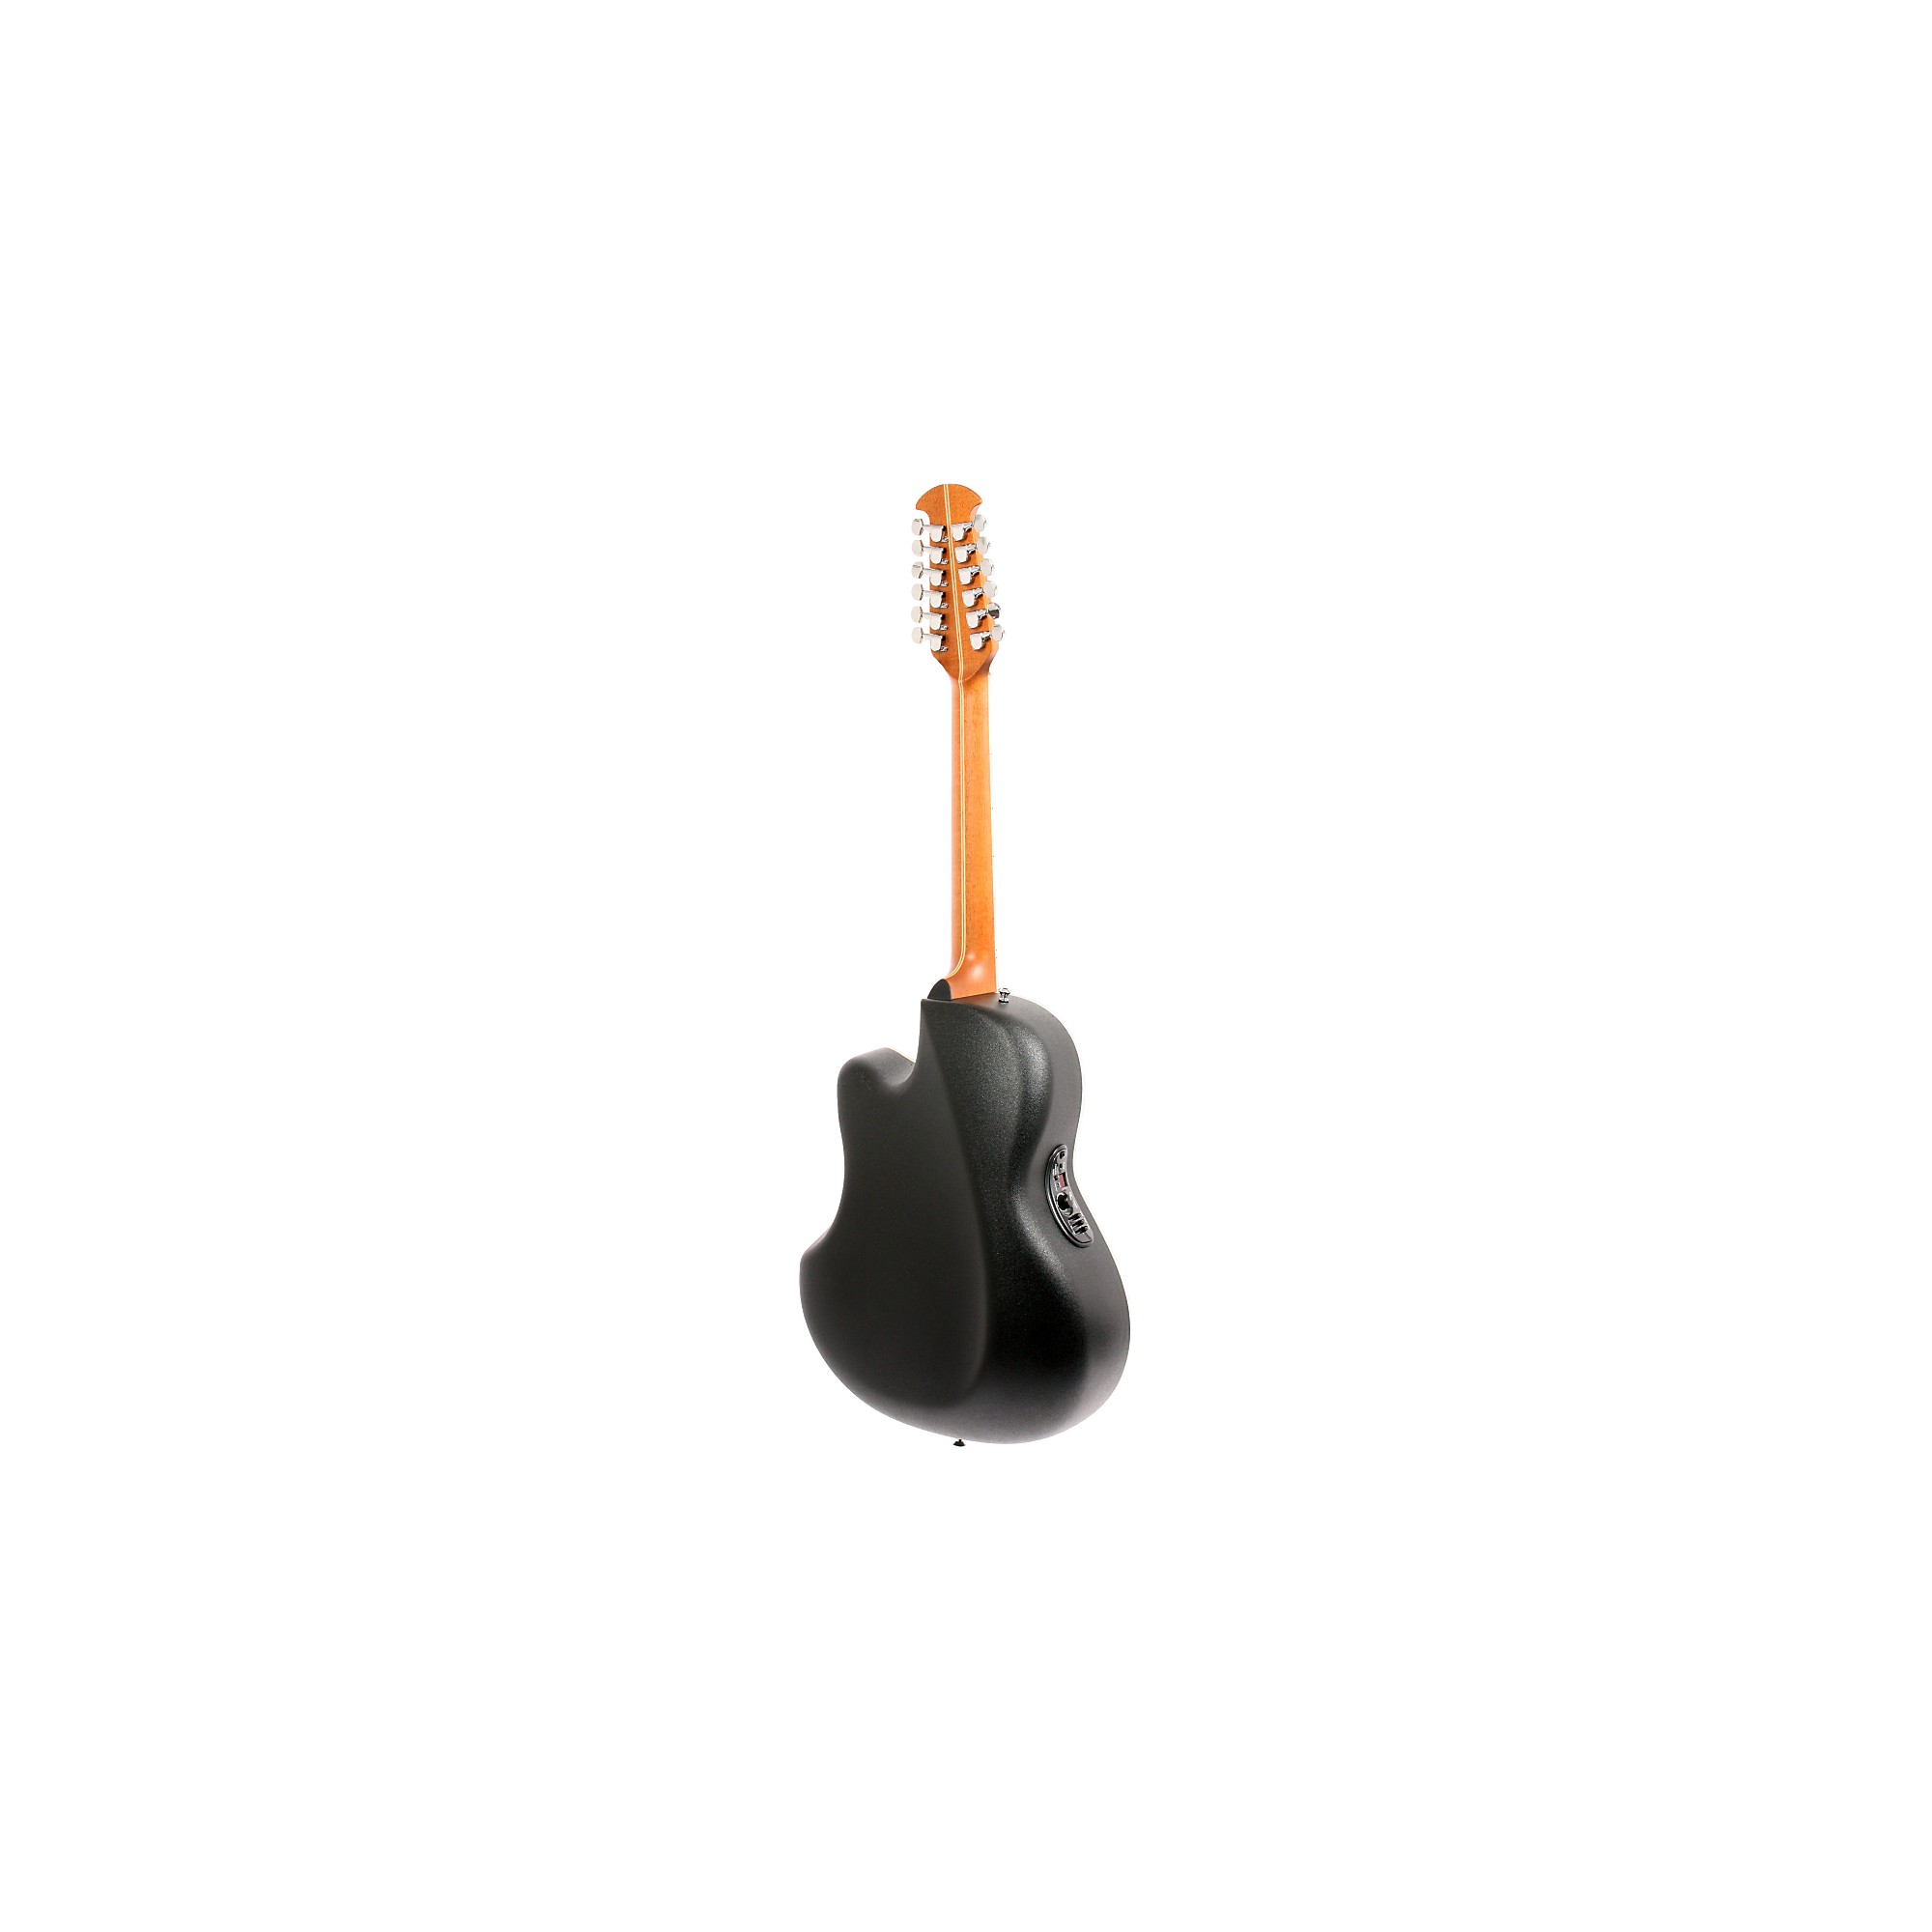 Ovation Standard Balladeer 2751 AX 12-струнная акусто-электрическая гитара, черная электроакустическая гитара ovation main street balladeer 2771str mb mahogany satin burst